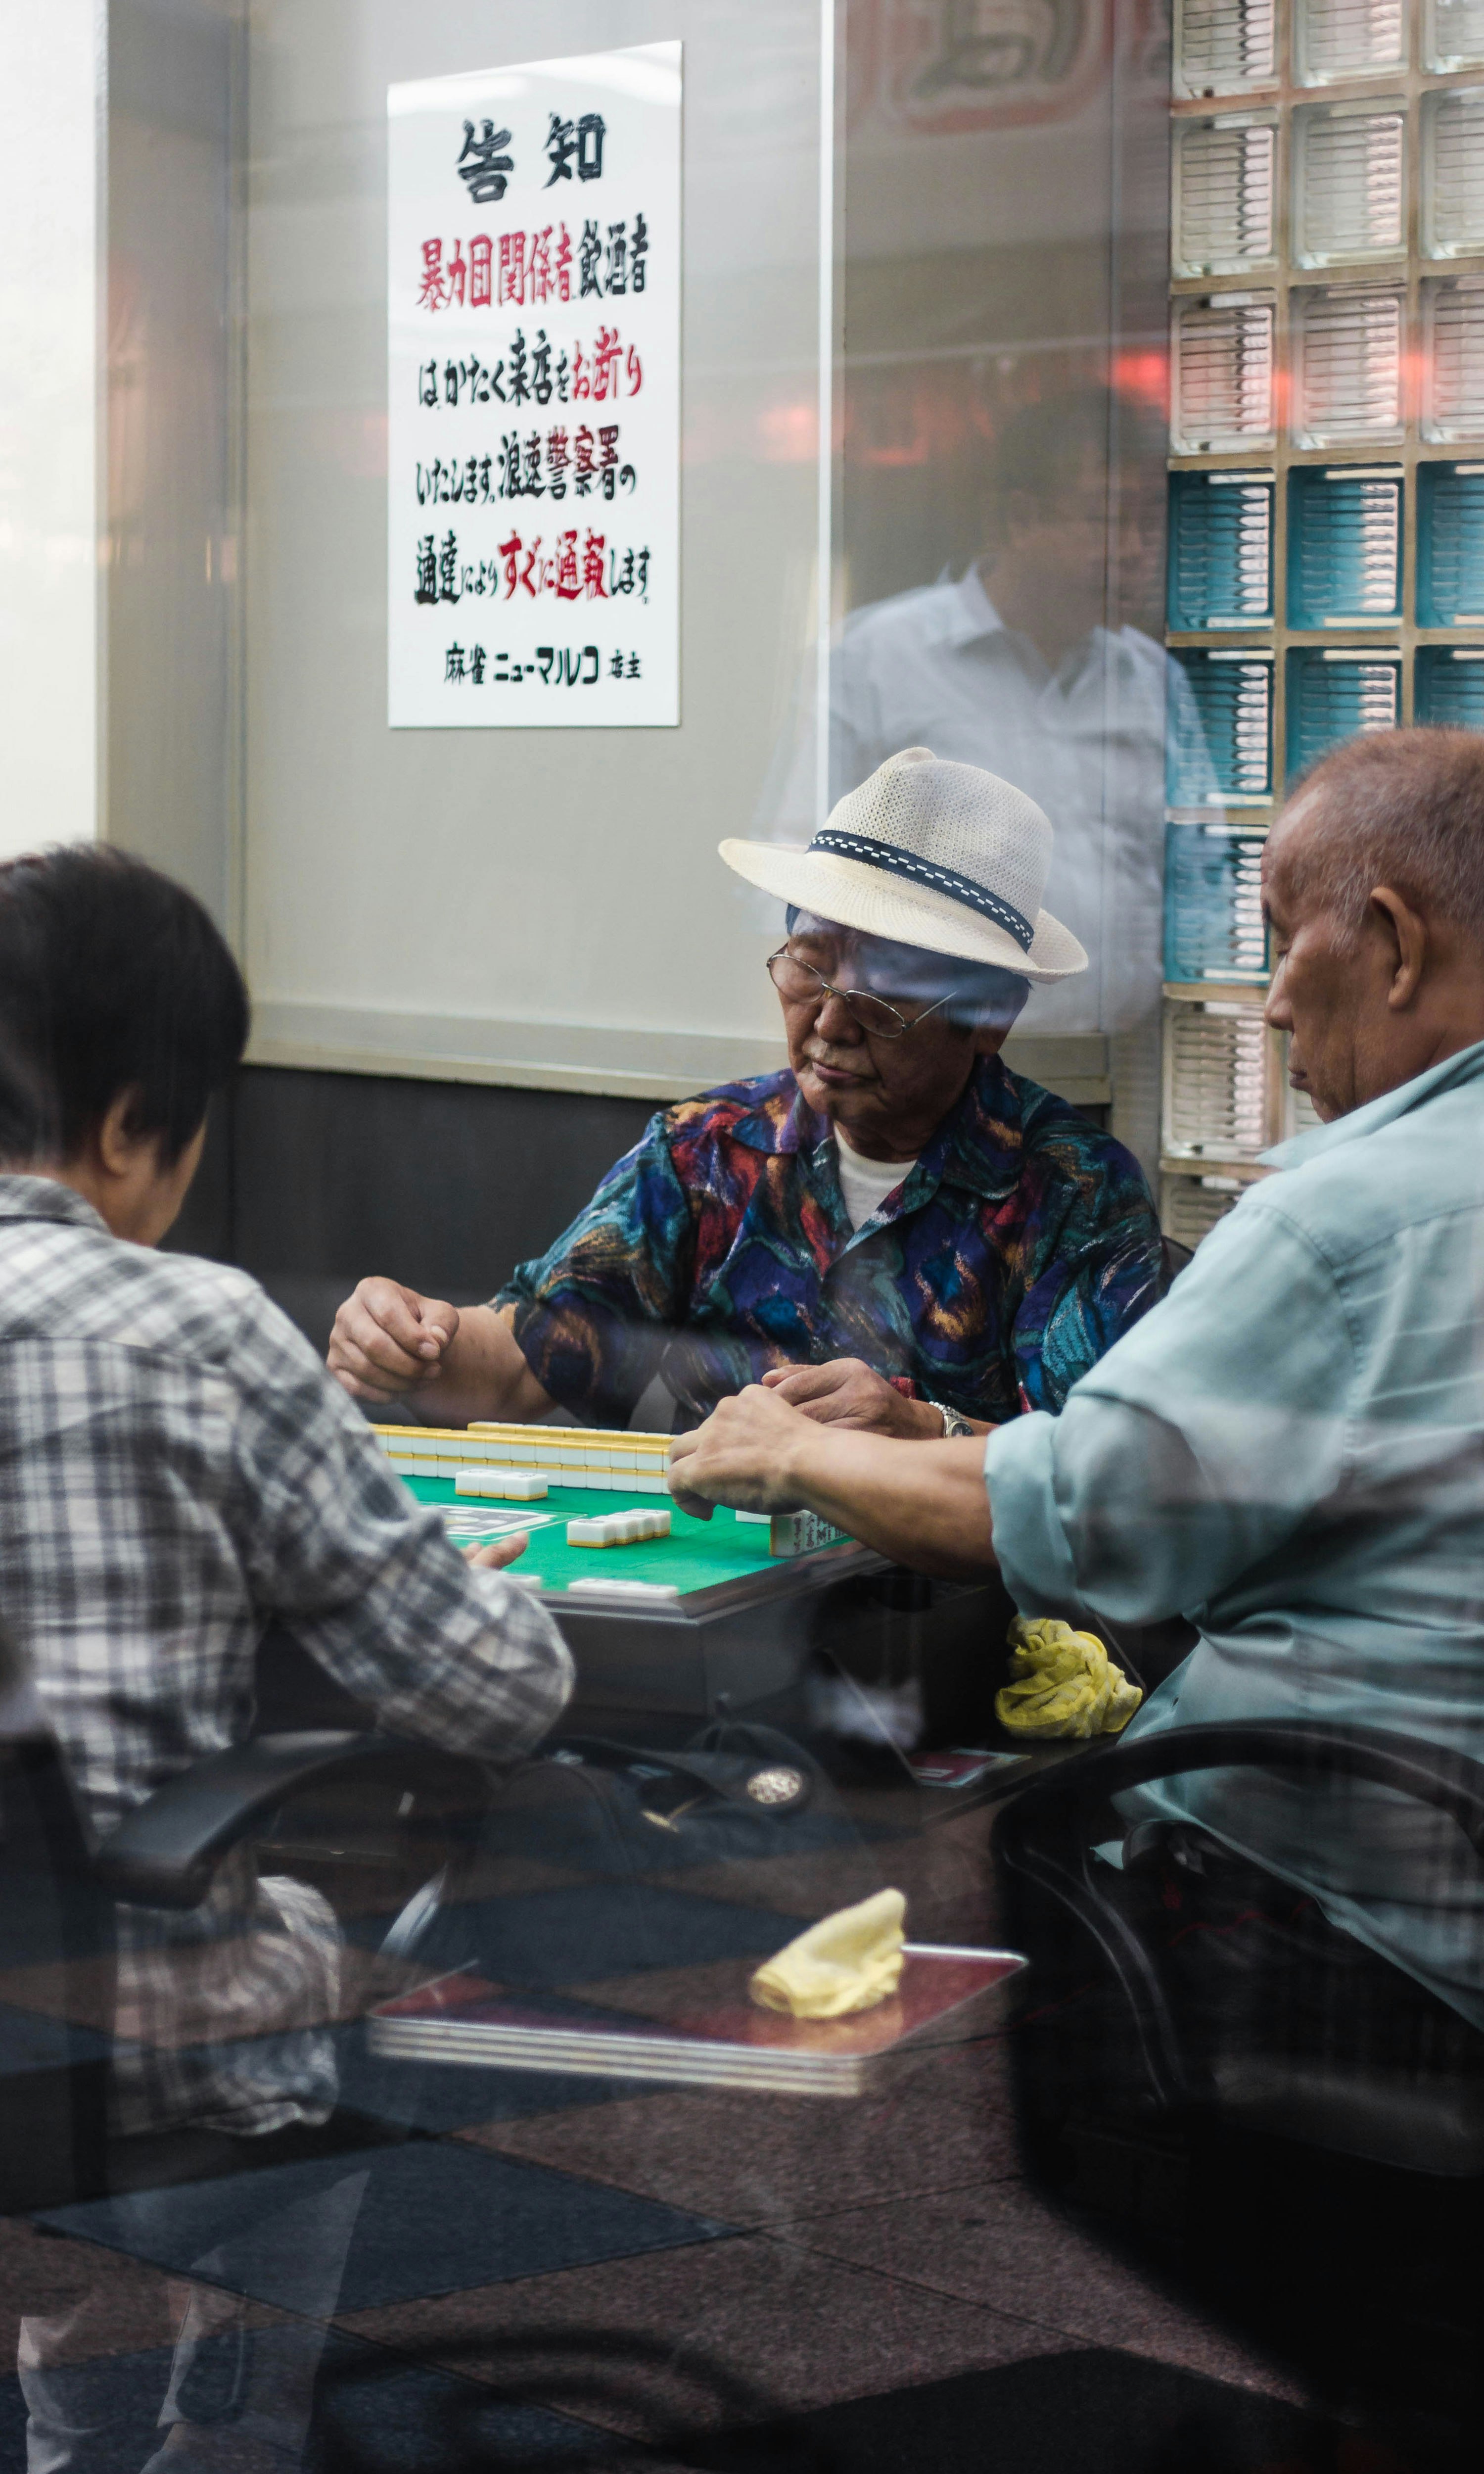 three man sitting playing mahjong inside room